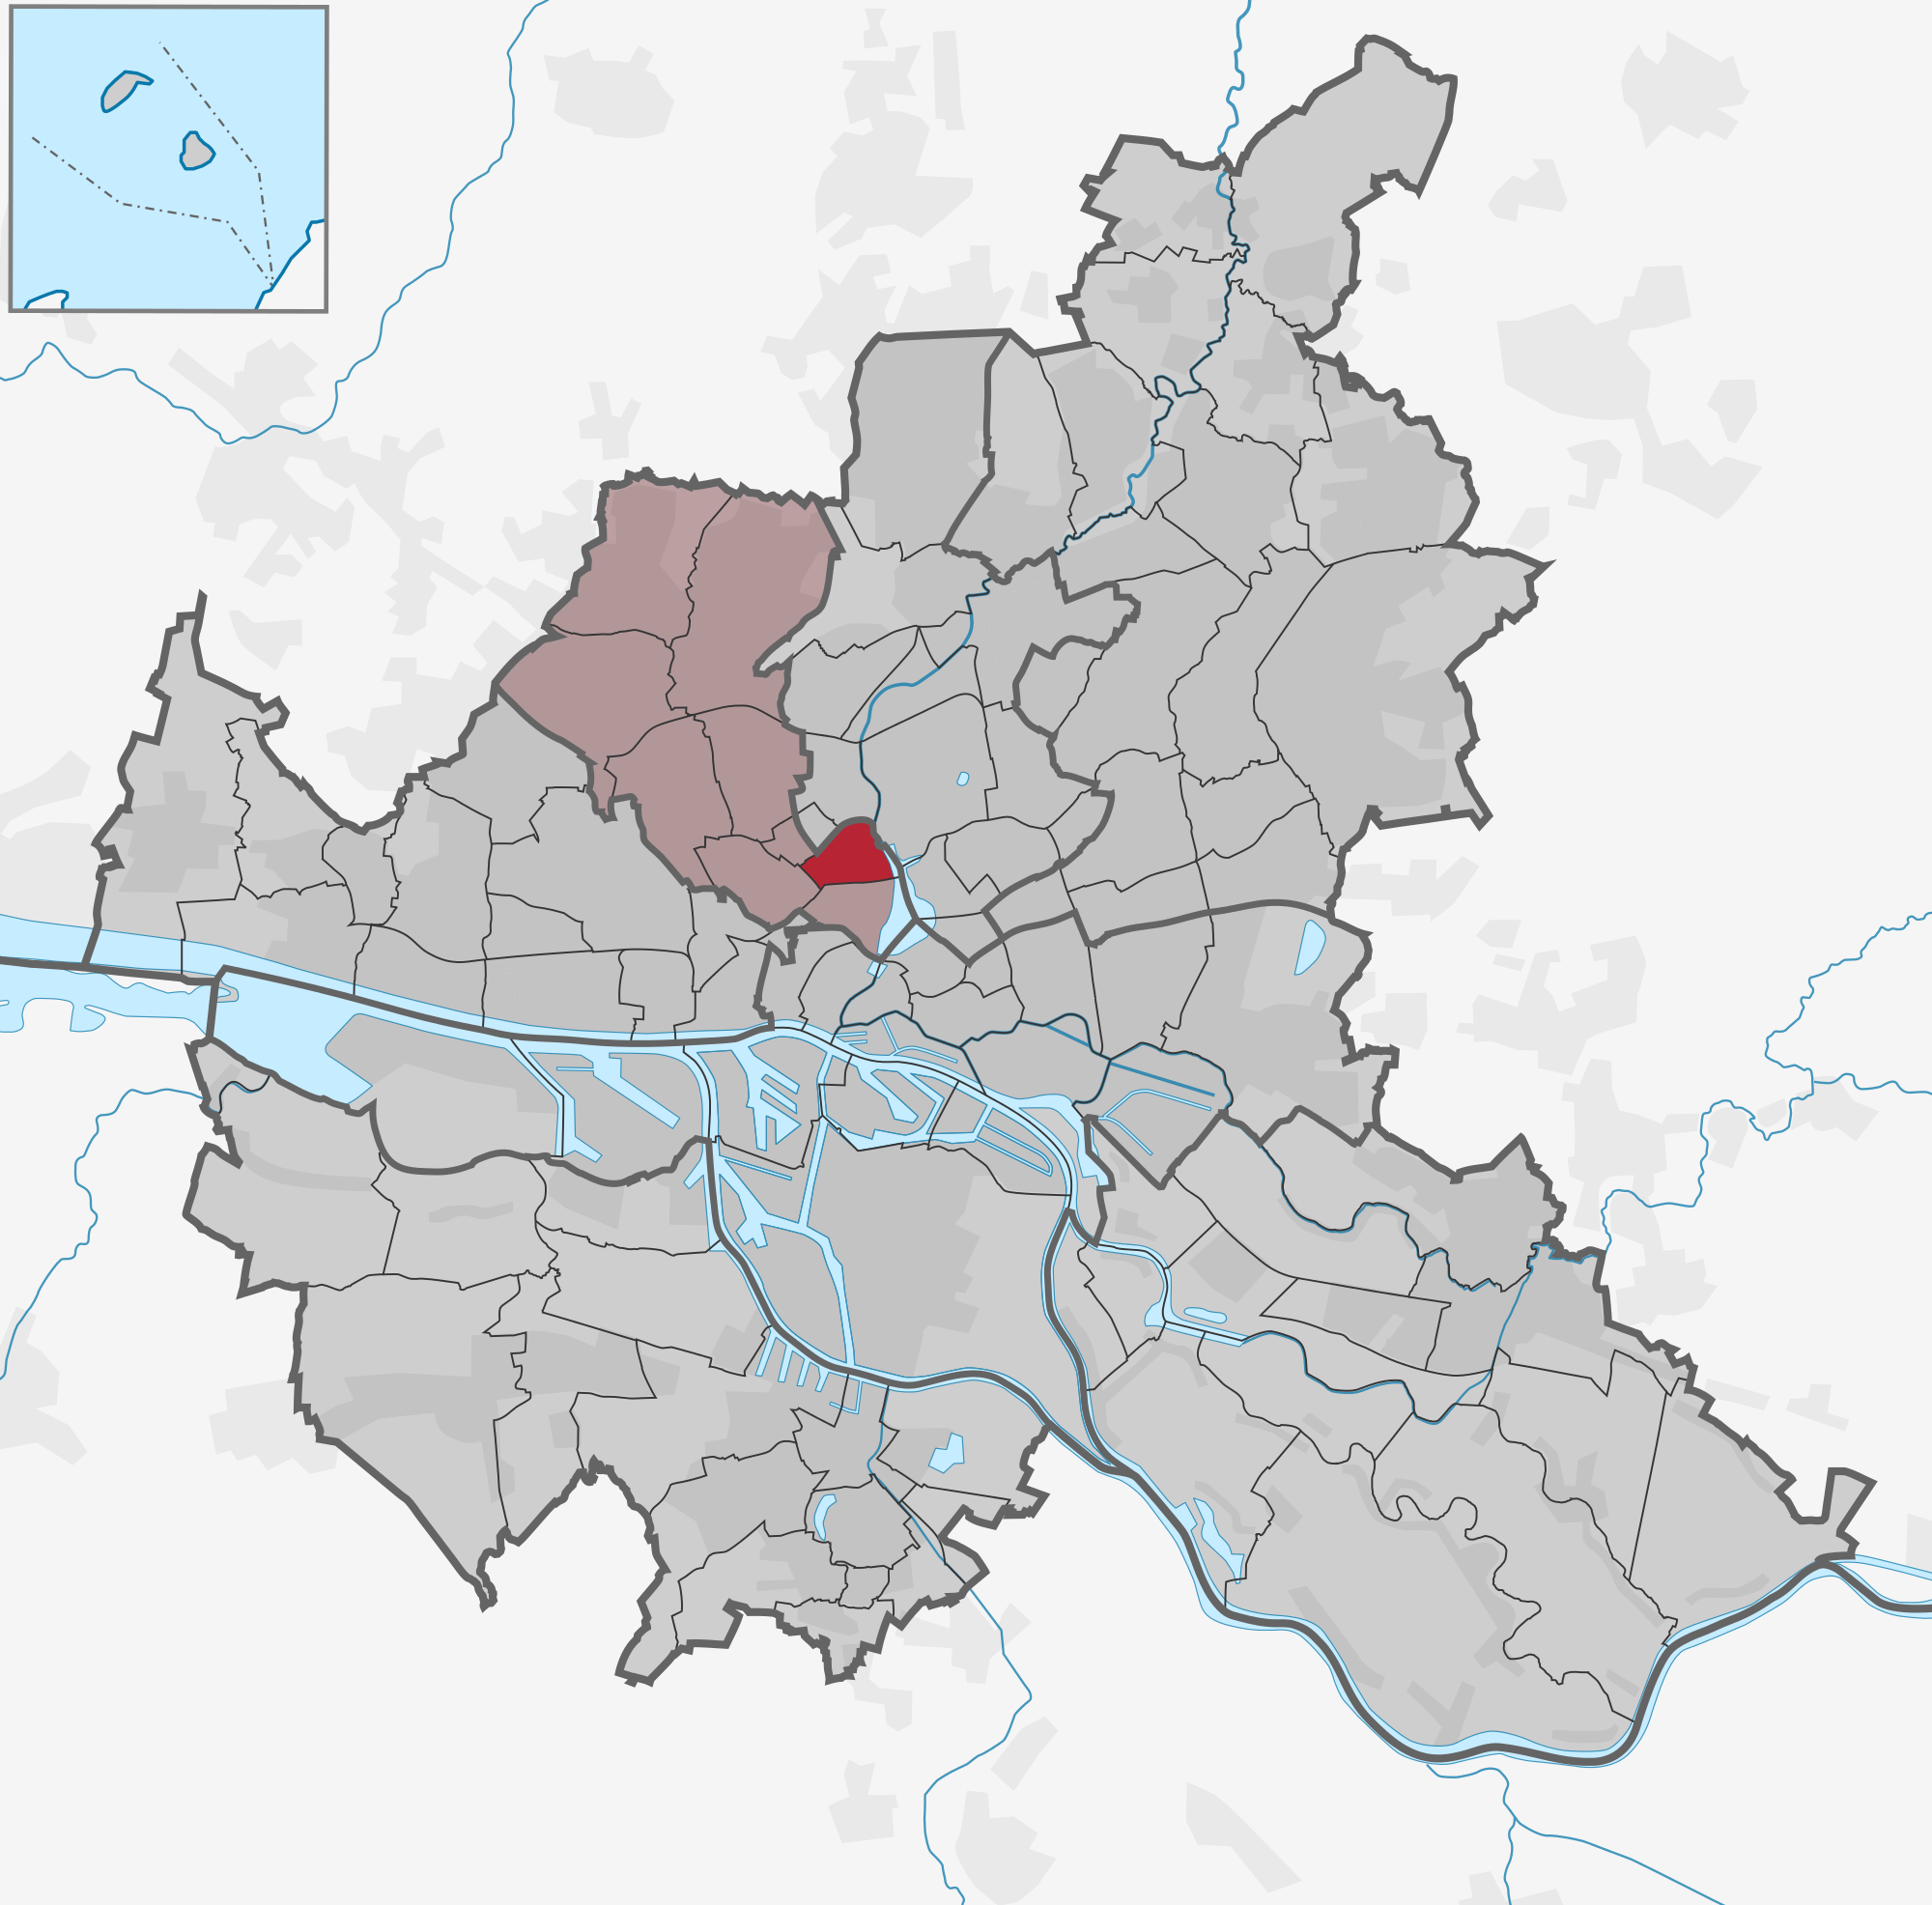 Stadtteil Harvestehude (Bezirk Eimsbüttel)